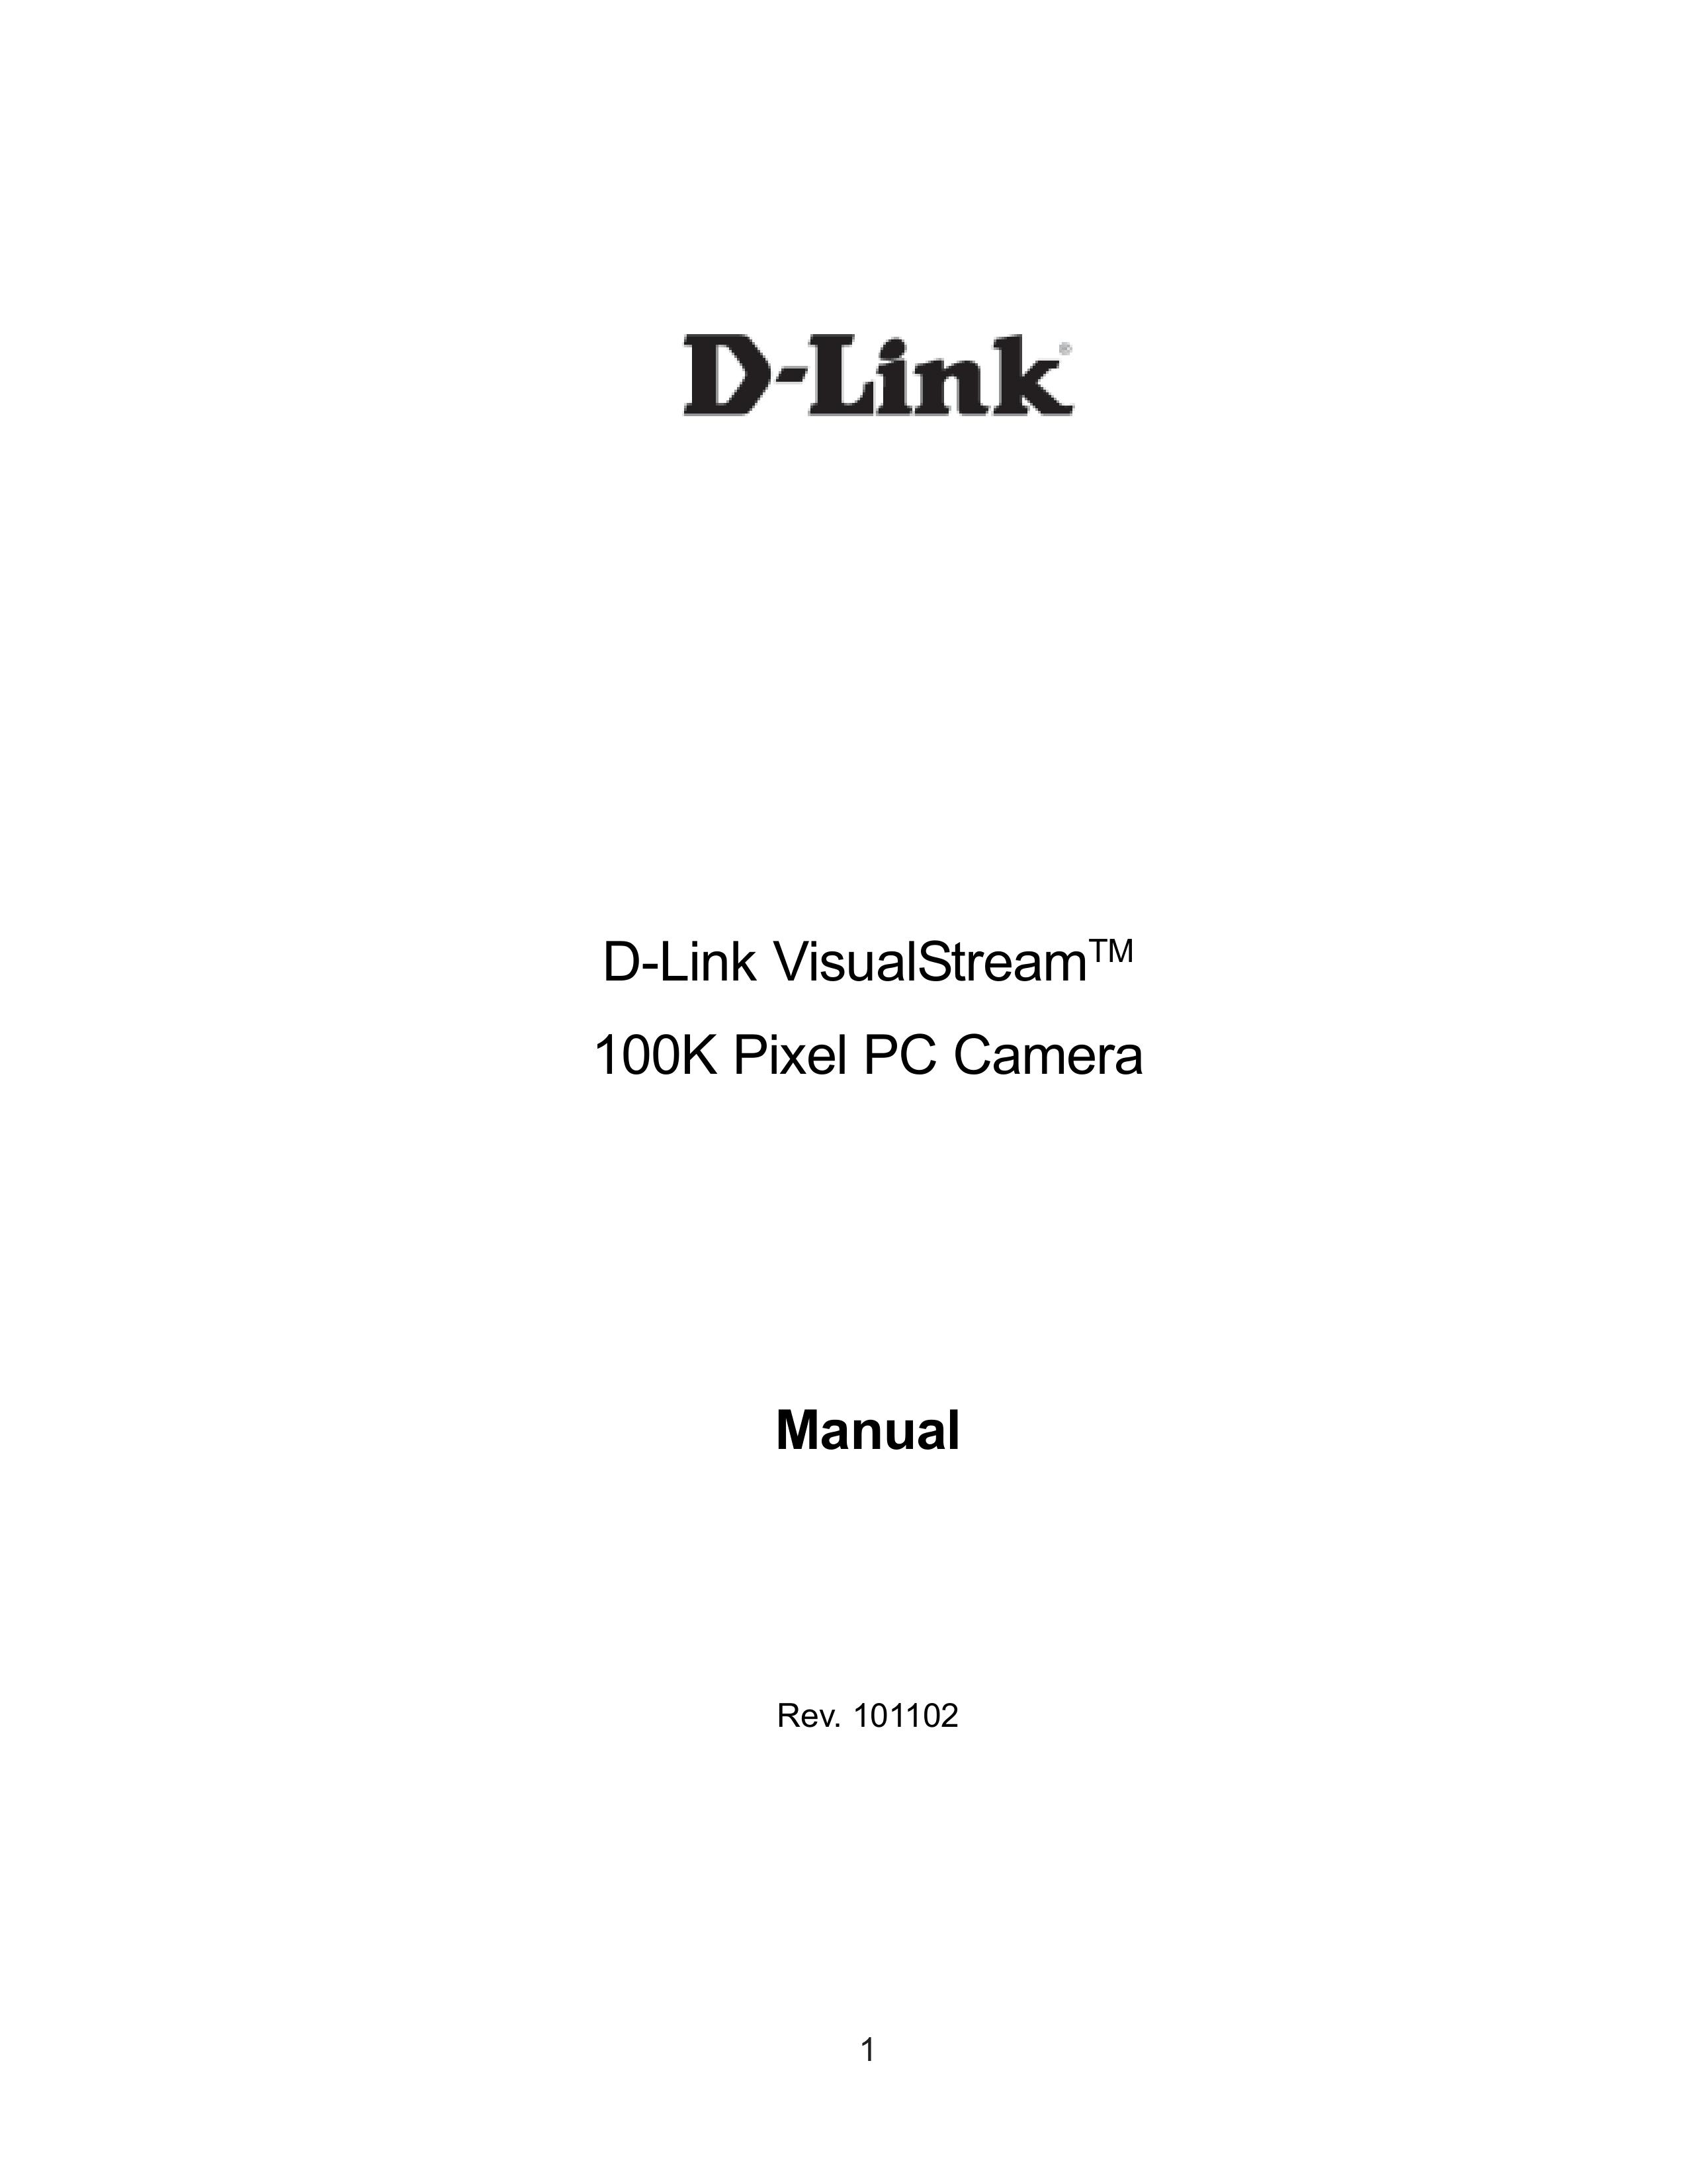 D-Link DSB-C110 Digital Camera User Manual